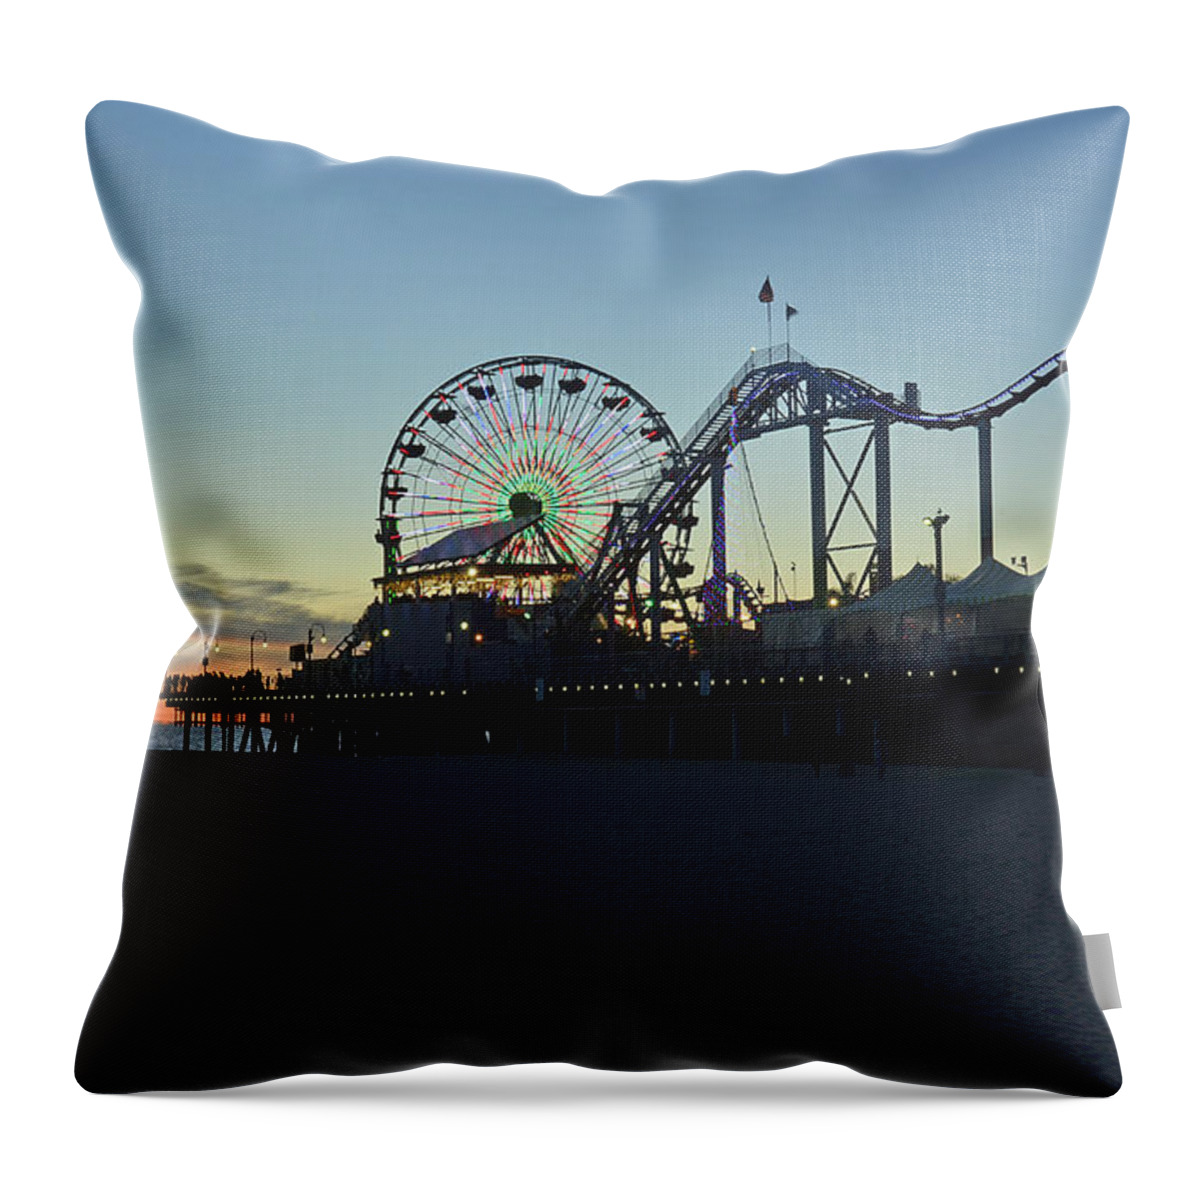 Santa Monica California Pier Sunset Beach Throw Pillow featuring the photograph Santa Monica Pier Sunset by William Kimble